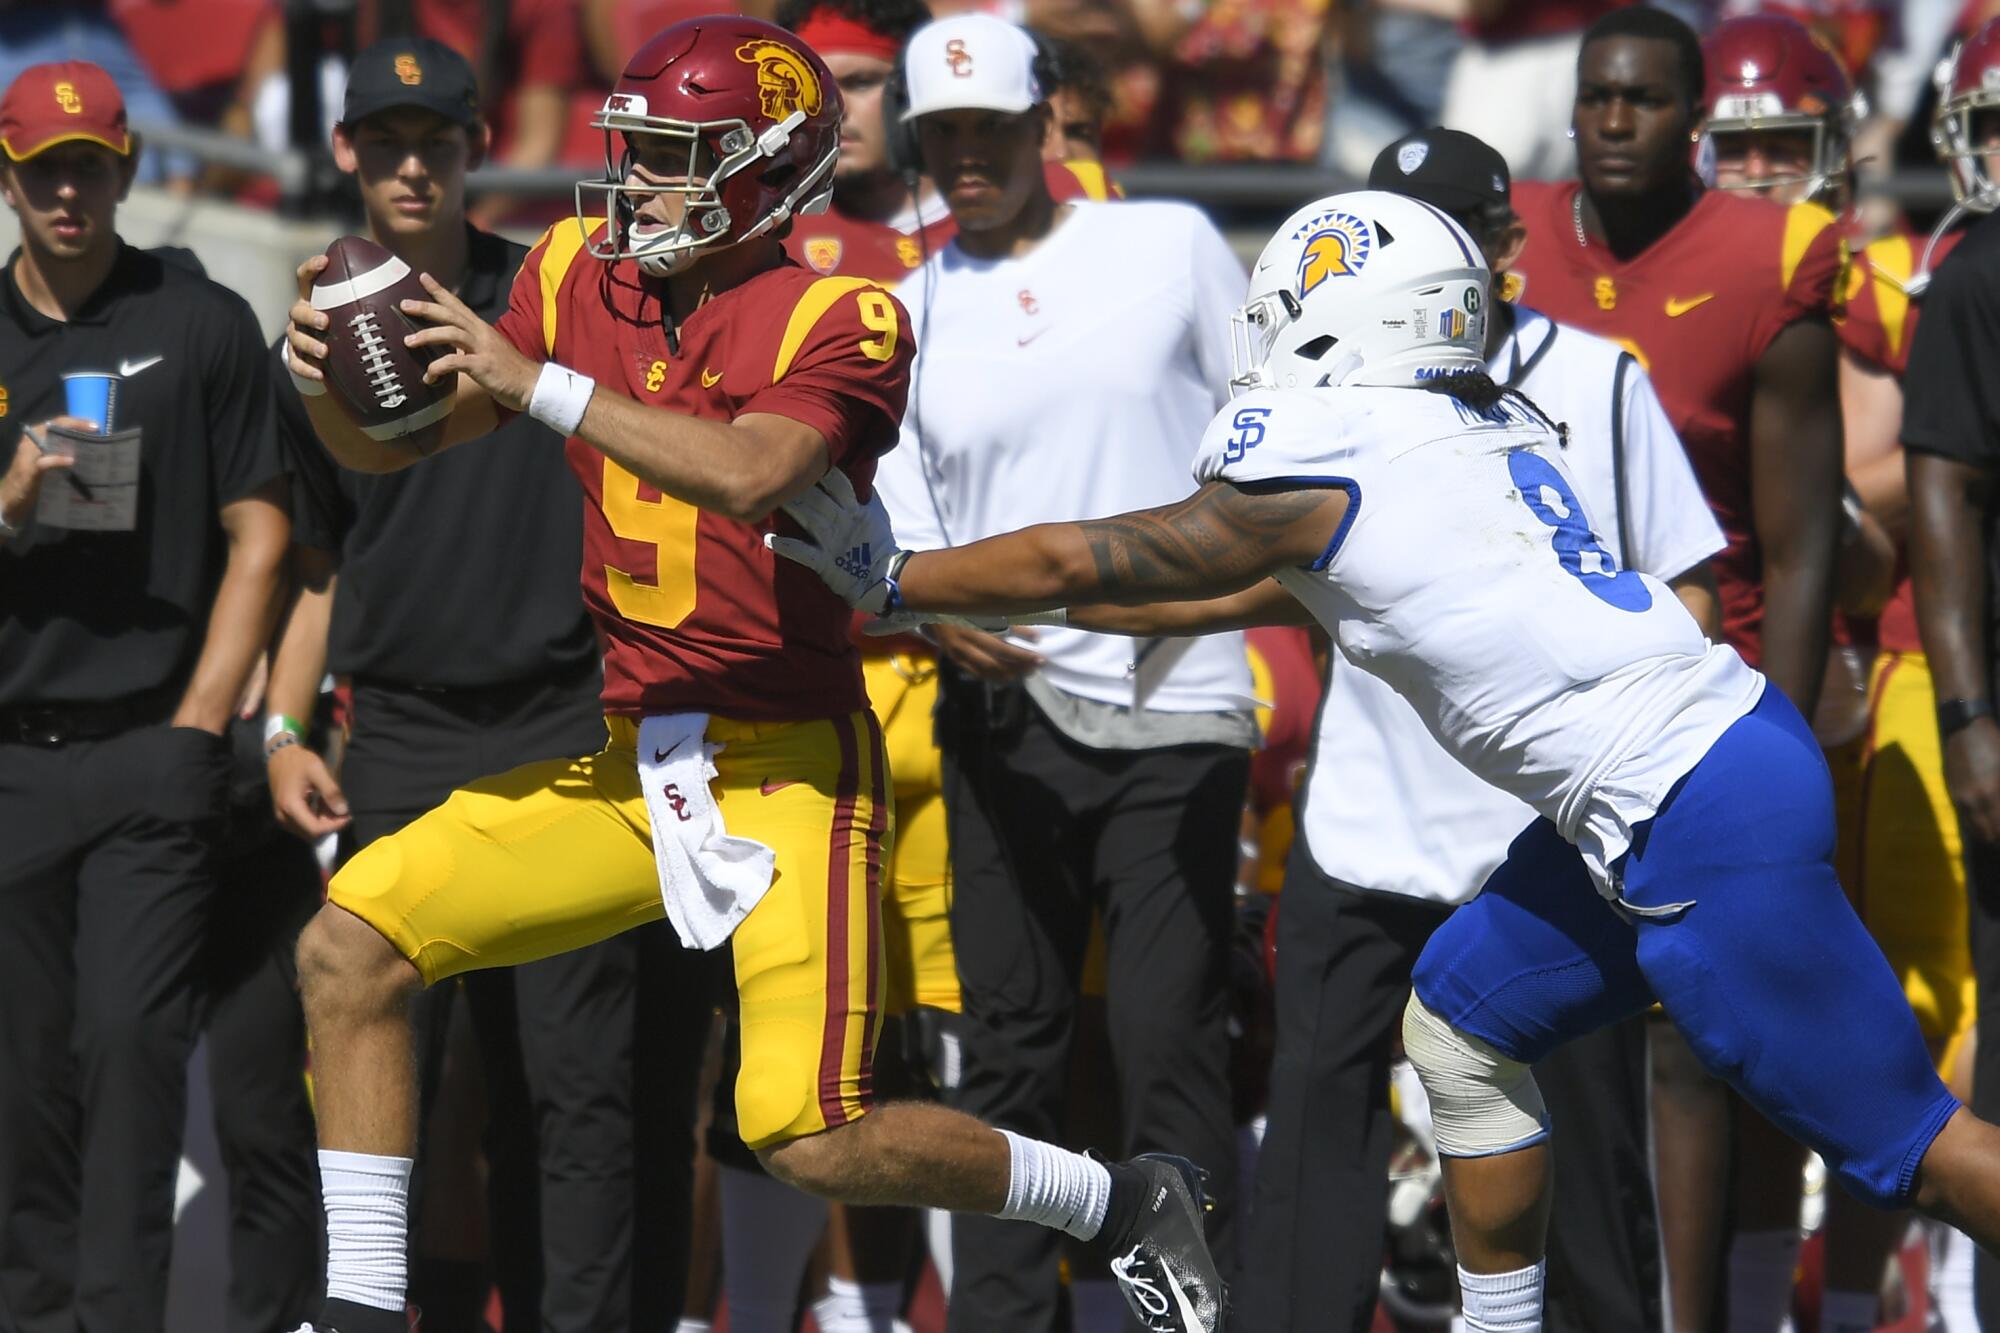 San Jose State linebacker Alii Matau pushes USC quarterback Kedon Slovis out of bounds 